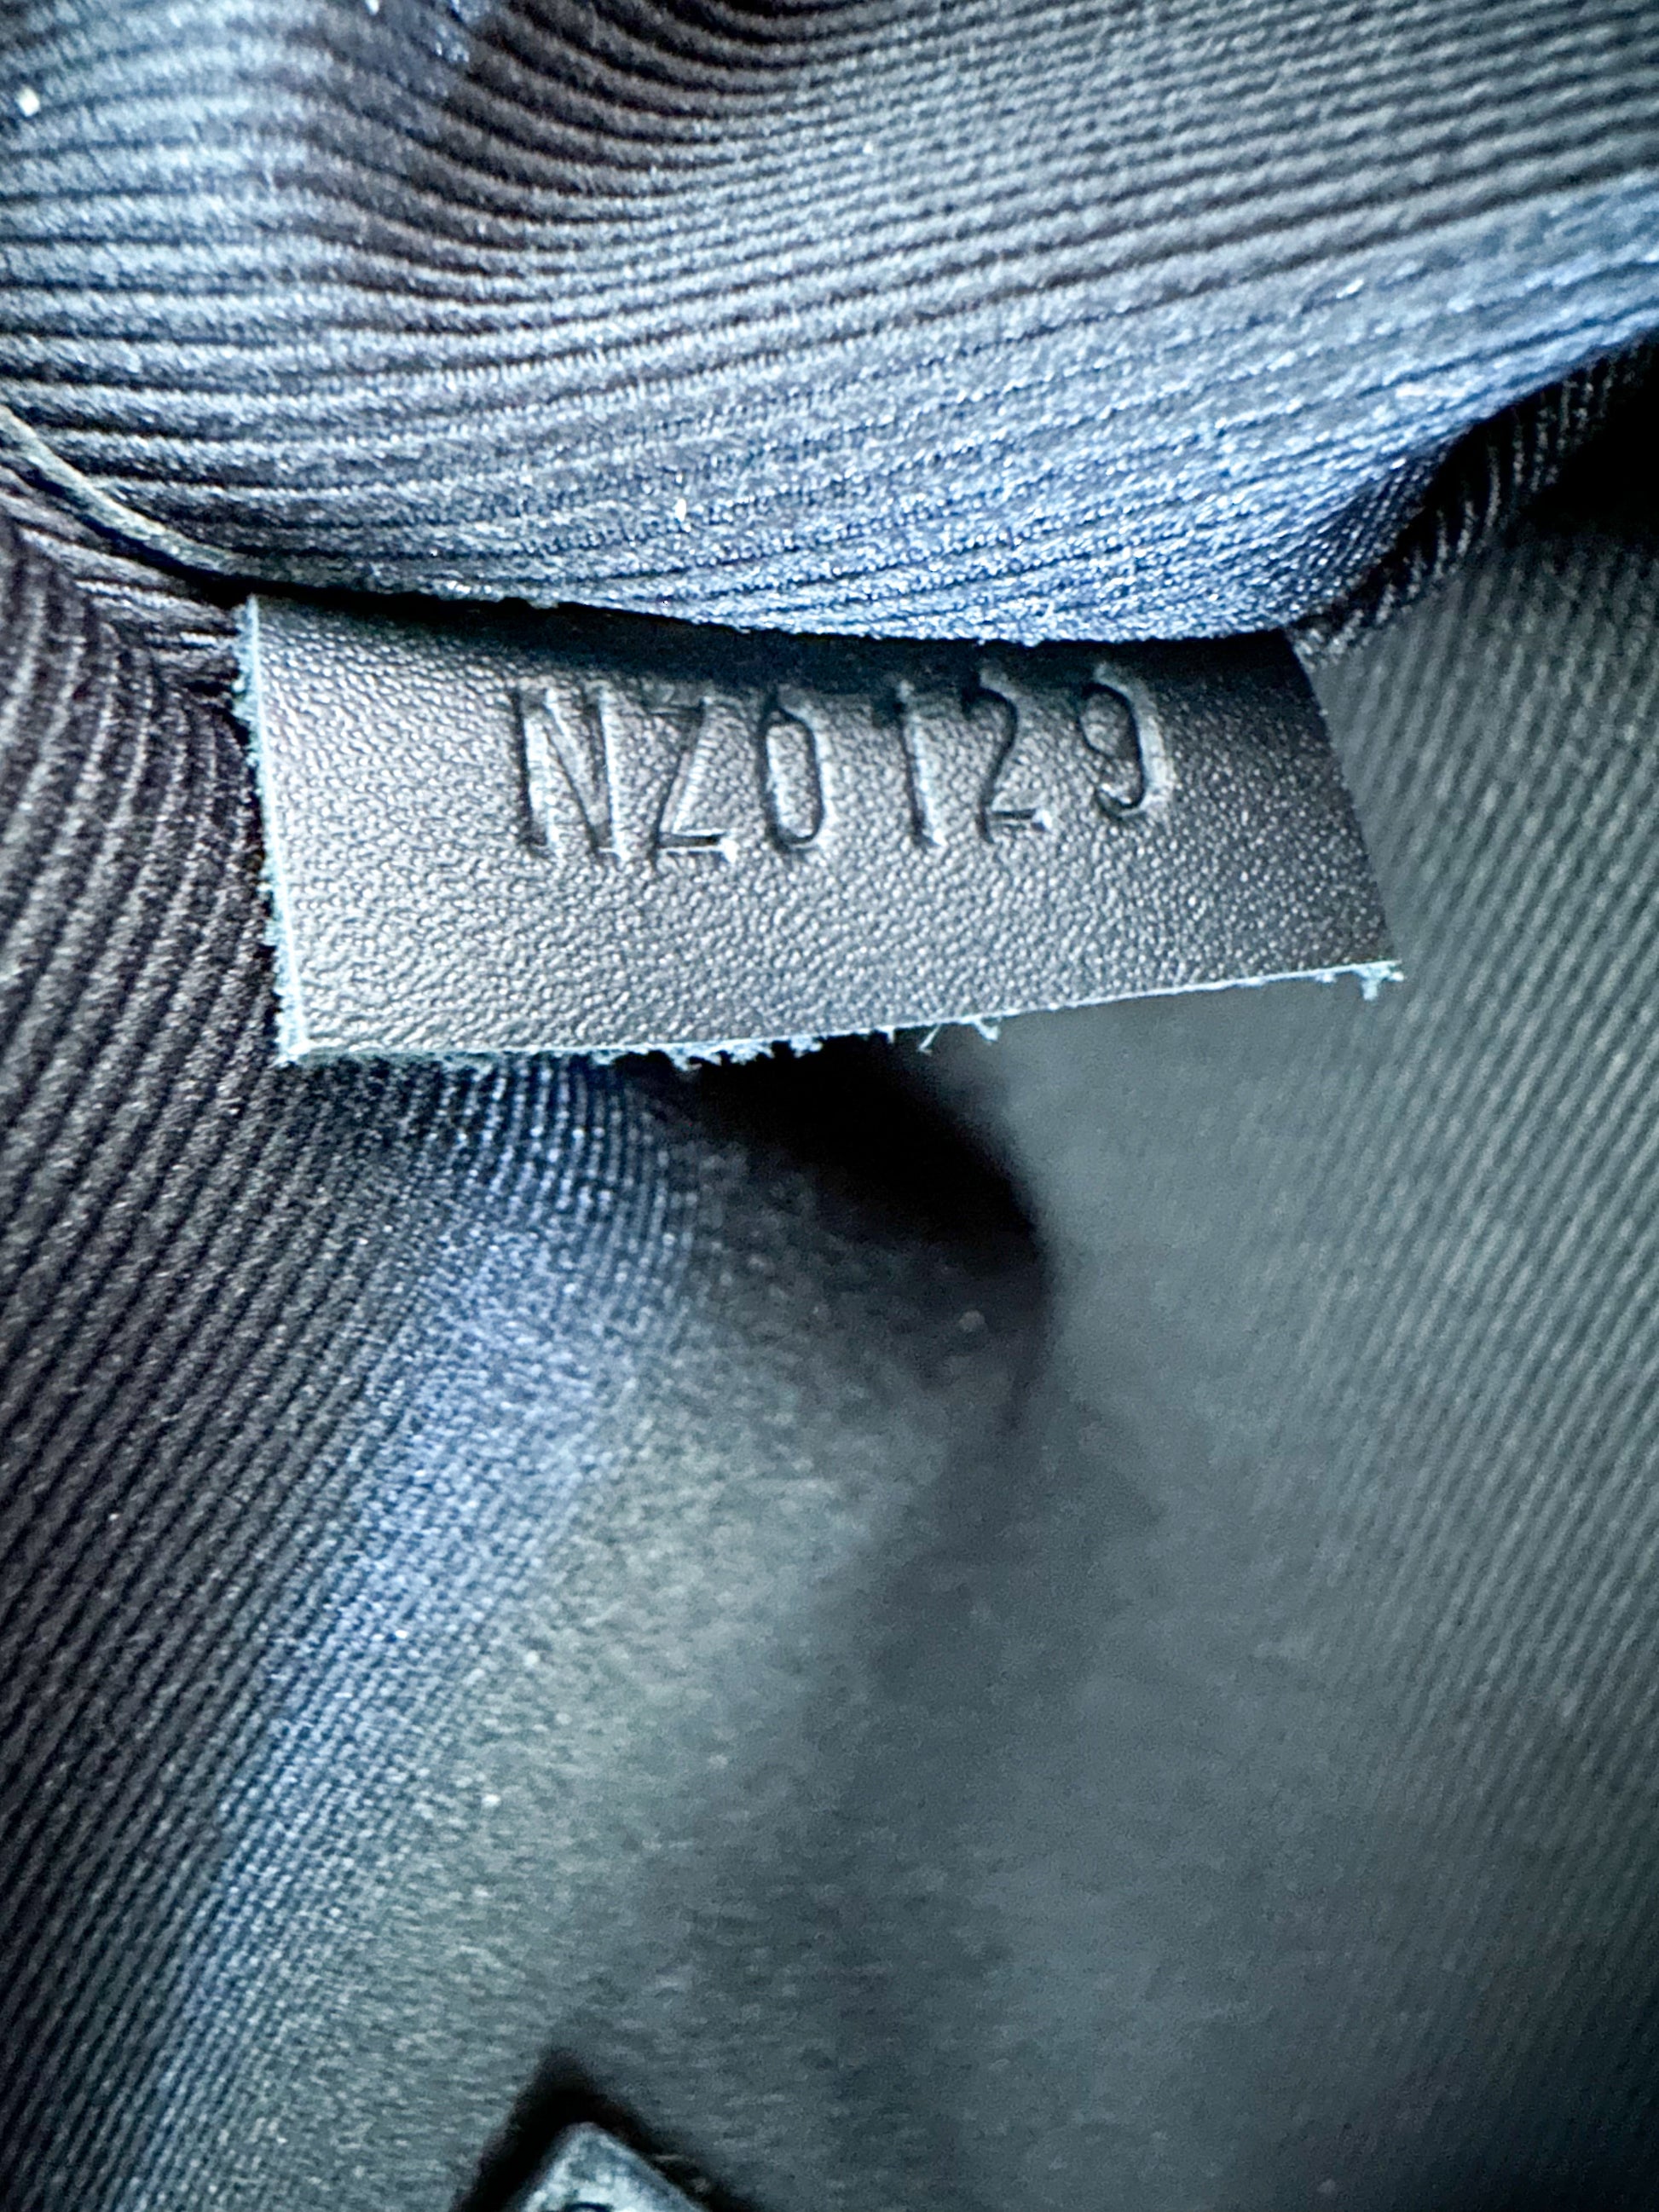 Louis Vuitton 2019 Soft Trunk Bag Monogram Taurillon 